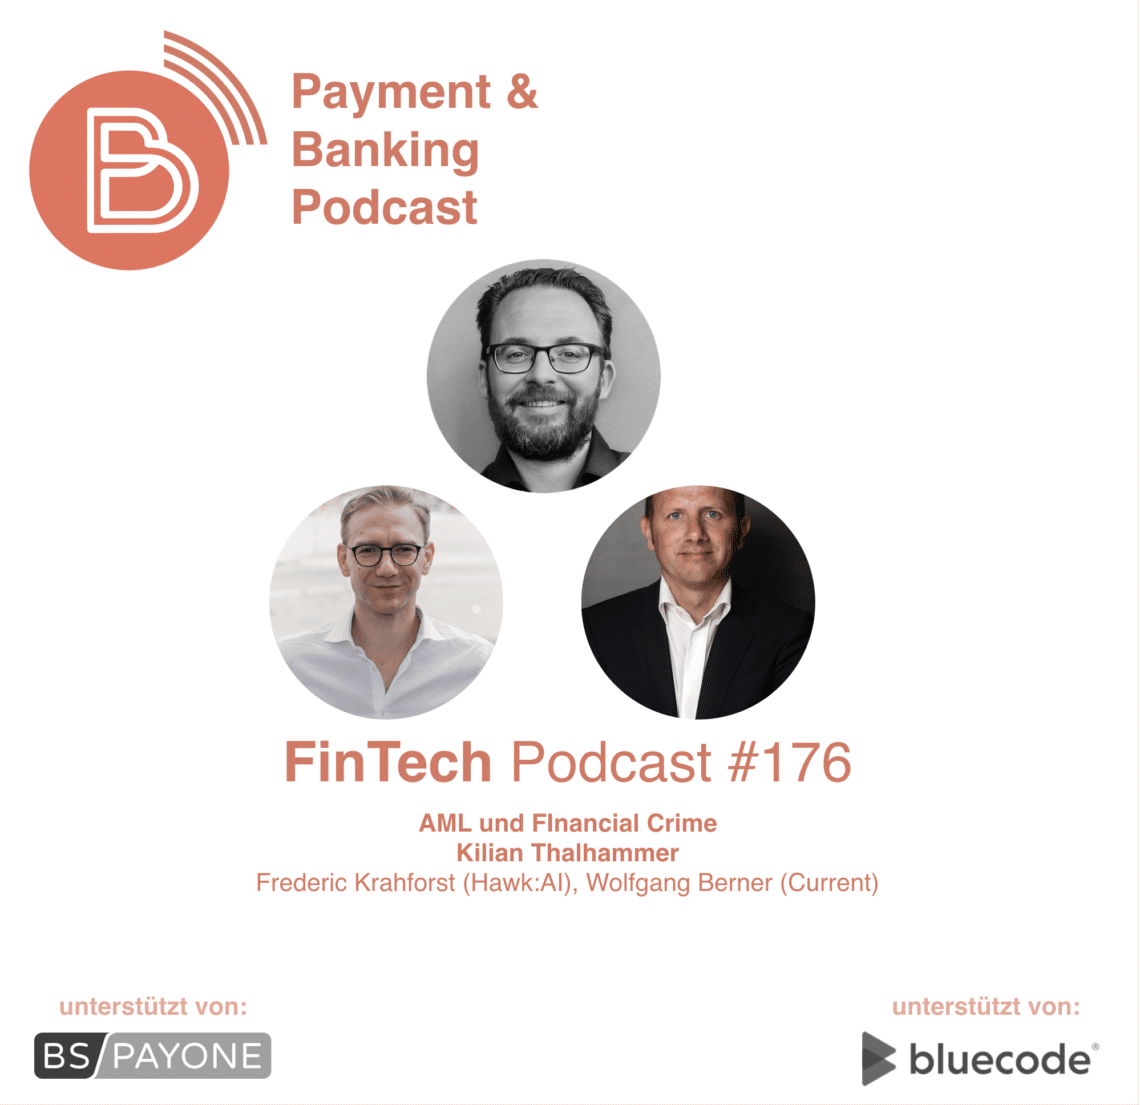 FinTech Podcast #176 - AML und Financial Crime